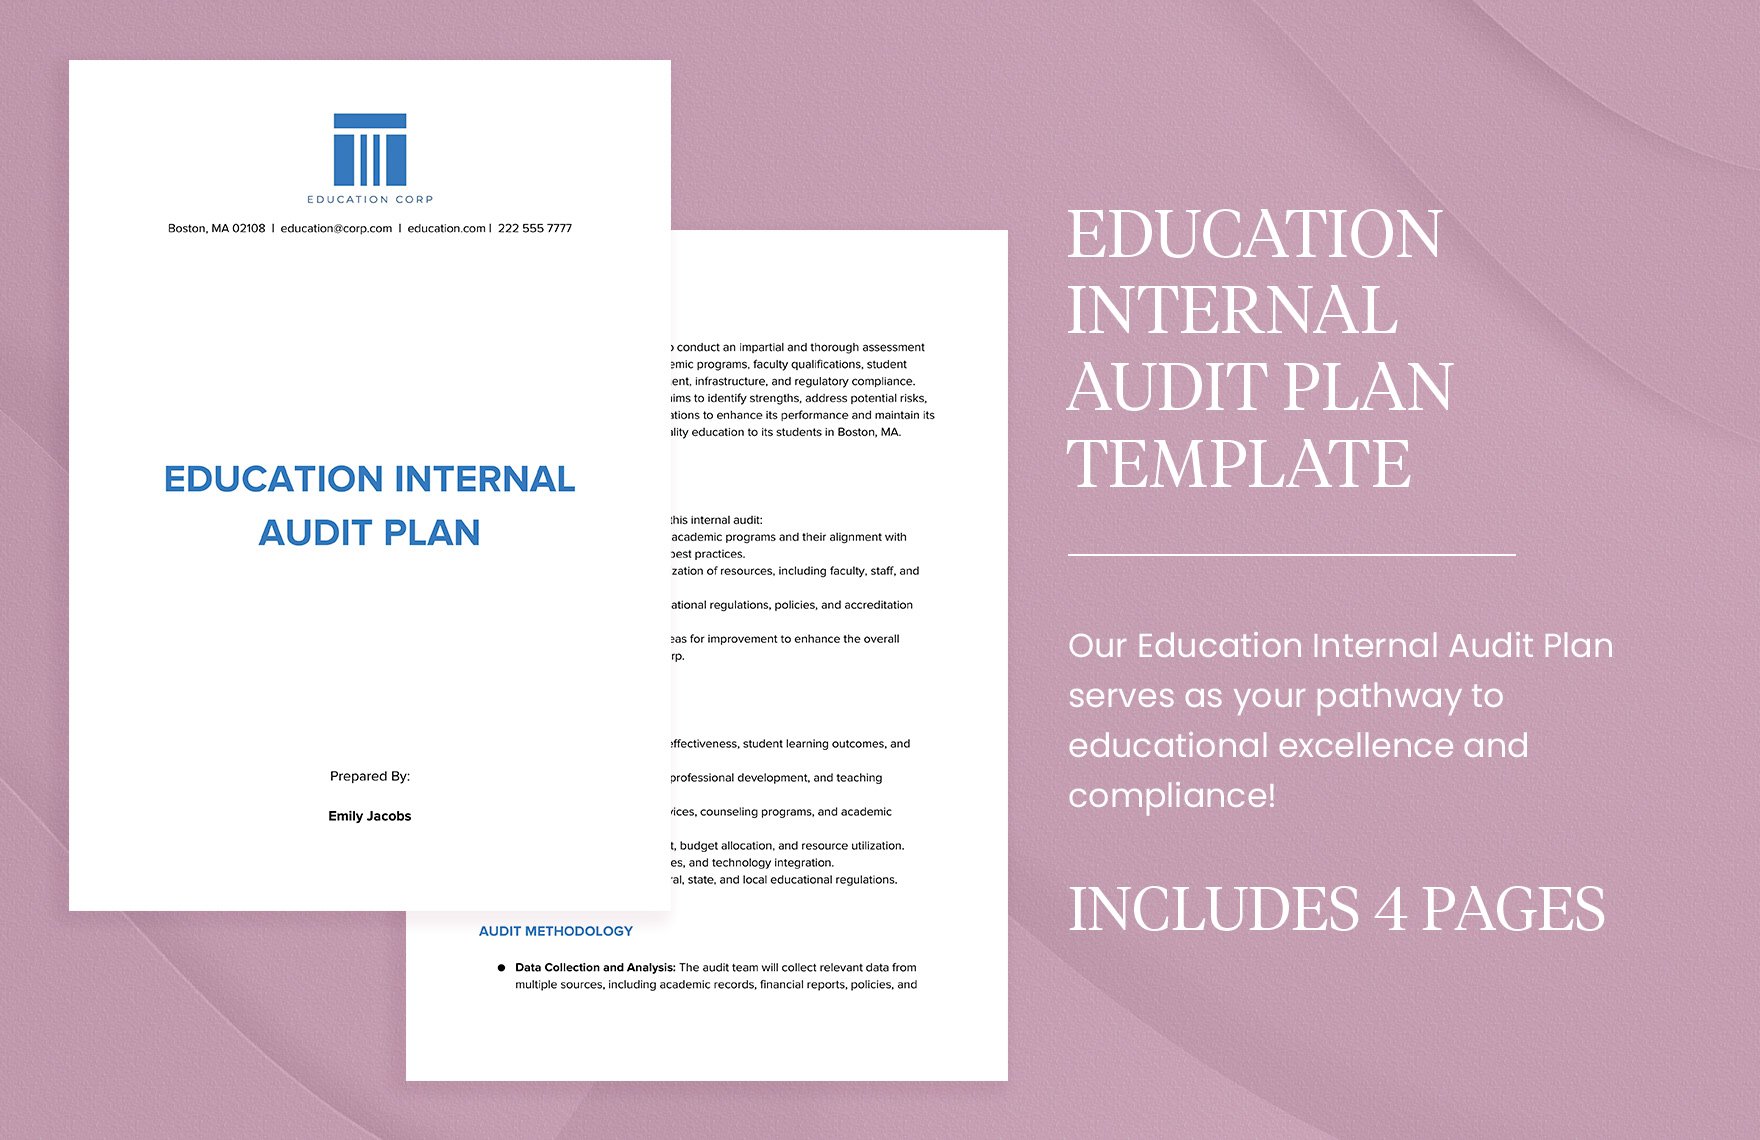 Education Internal Audit Plan Template in Word, Google Docs, PDF